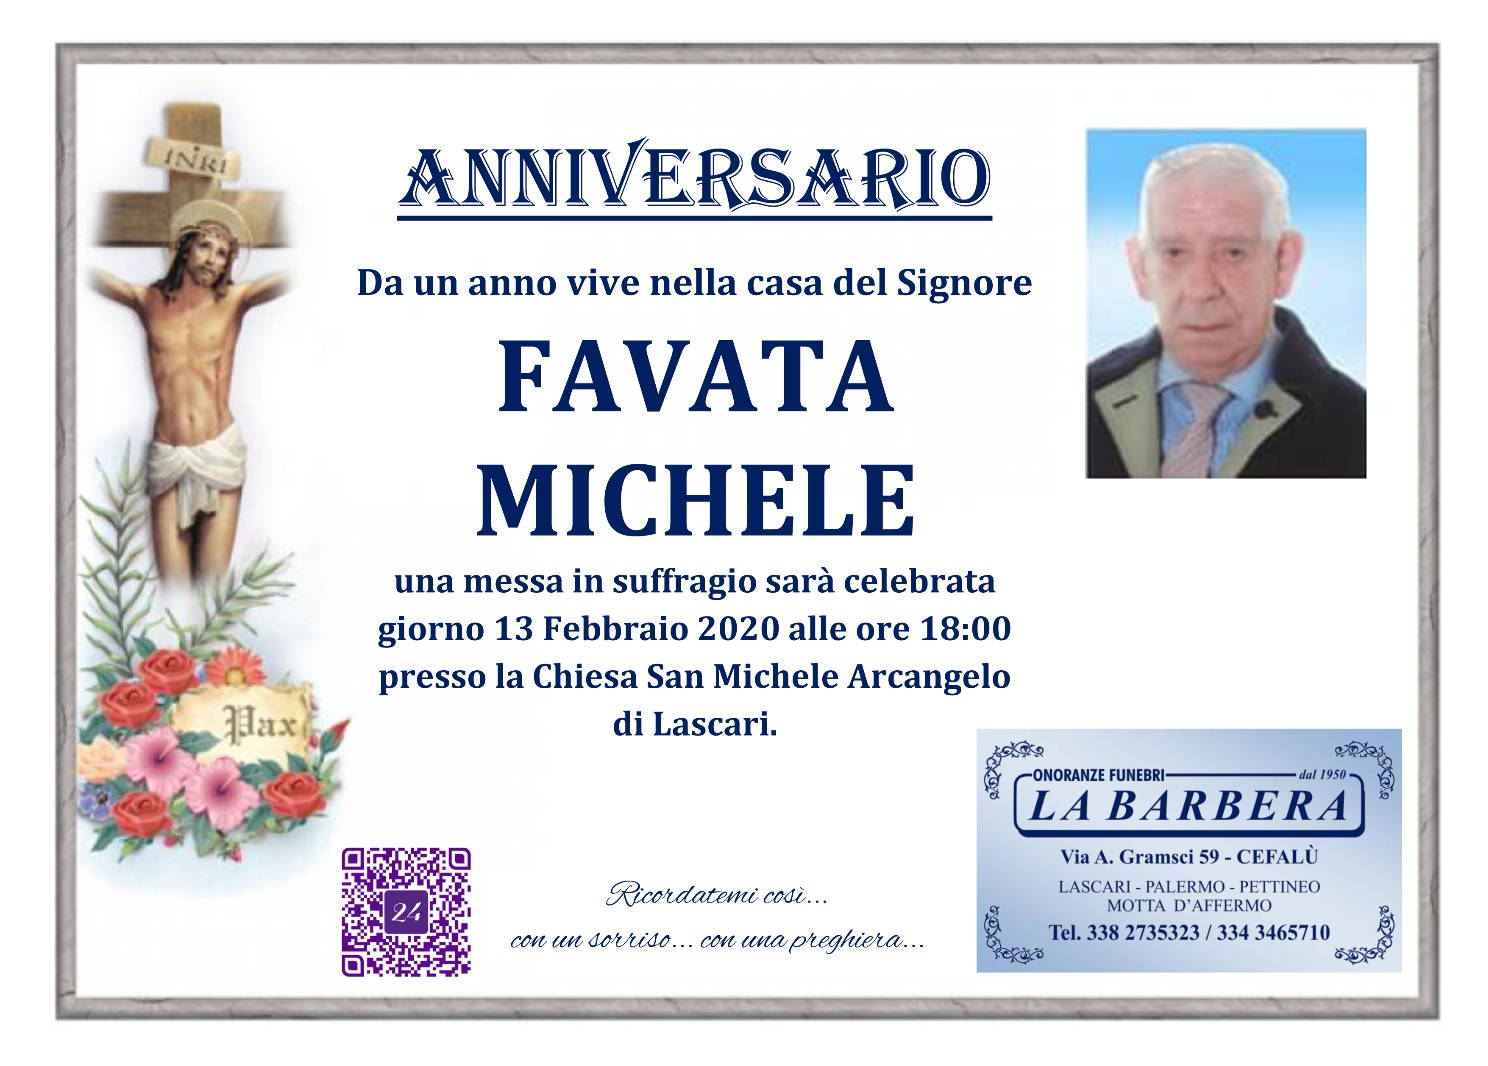 Michele Favata